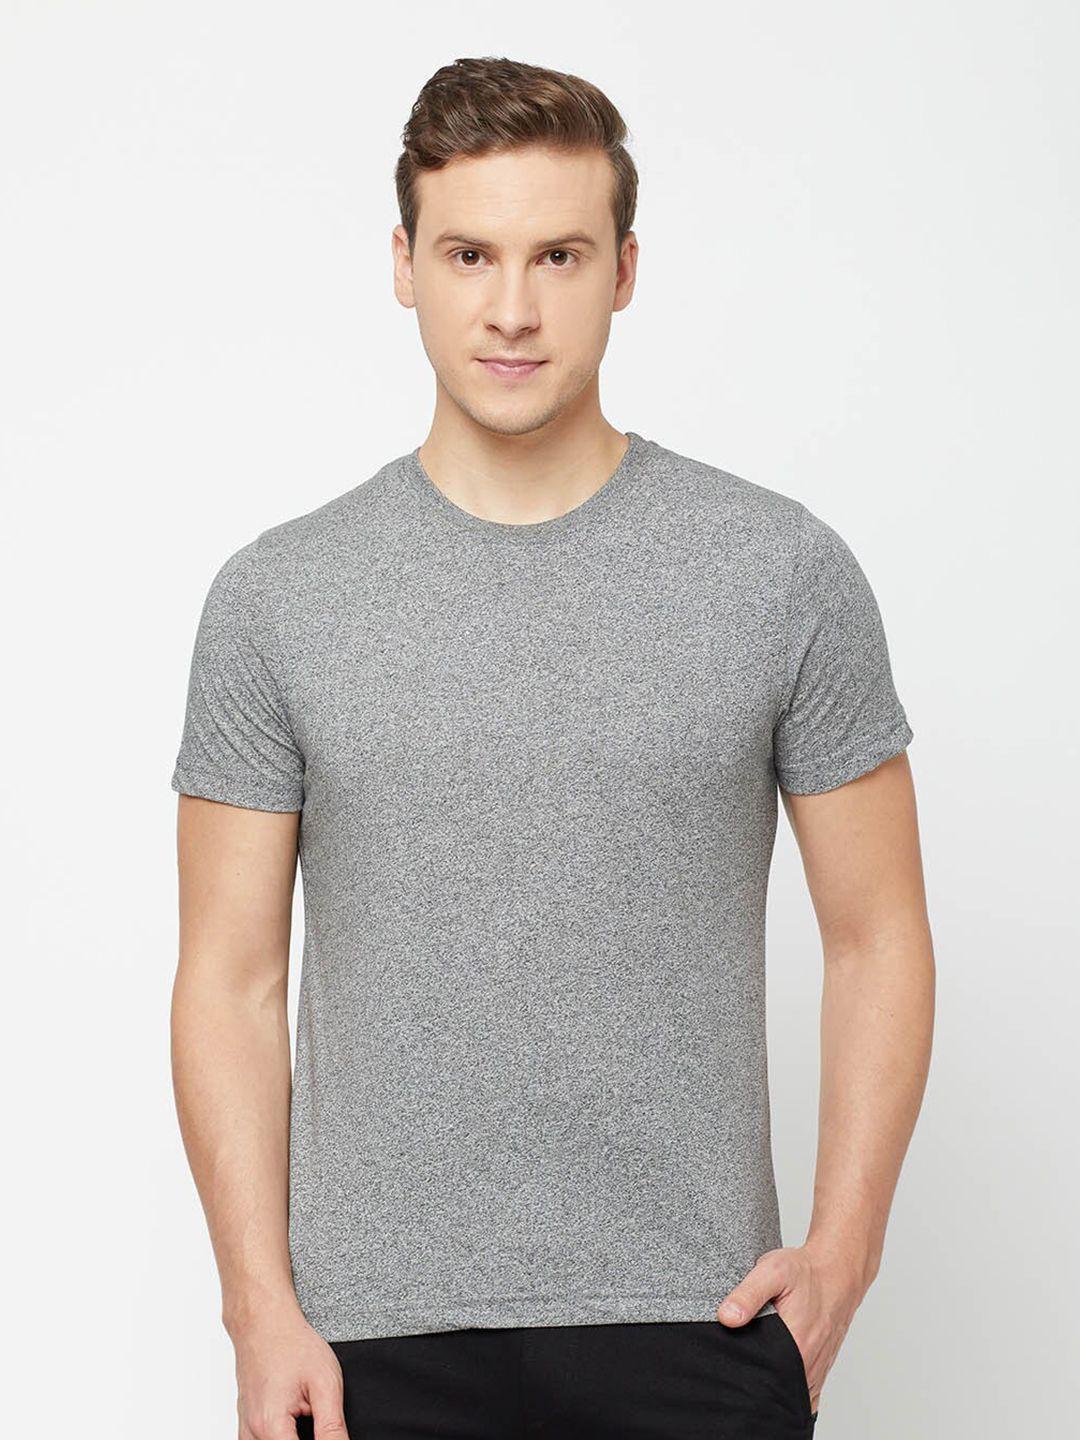 sporto men grey solid cotton t-shirt